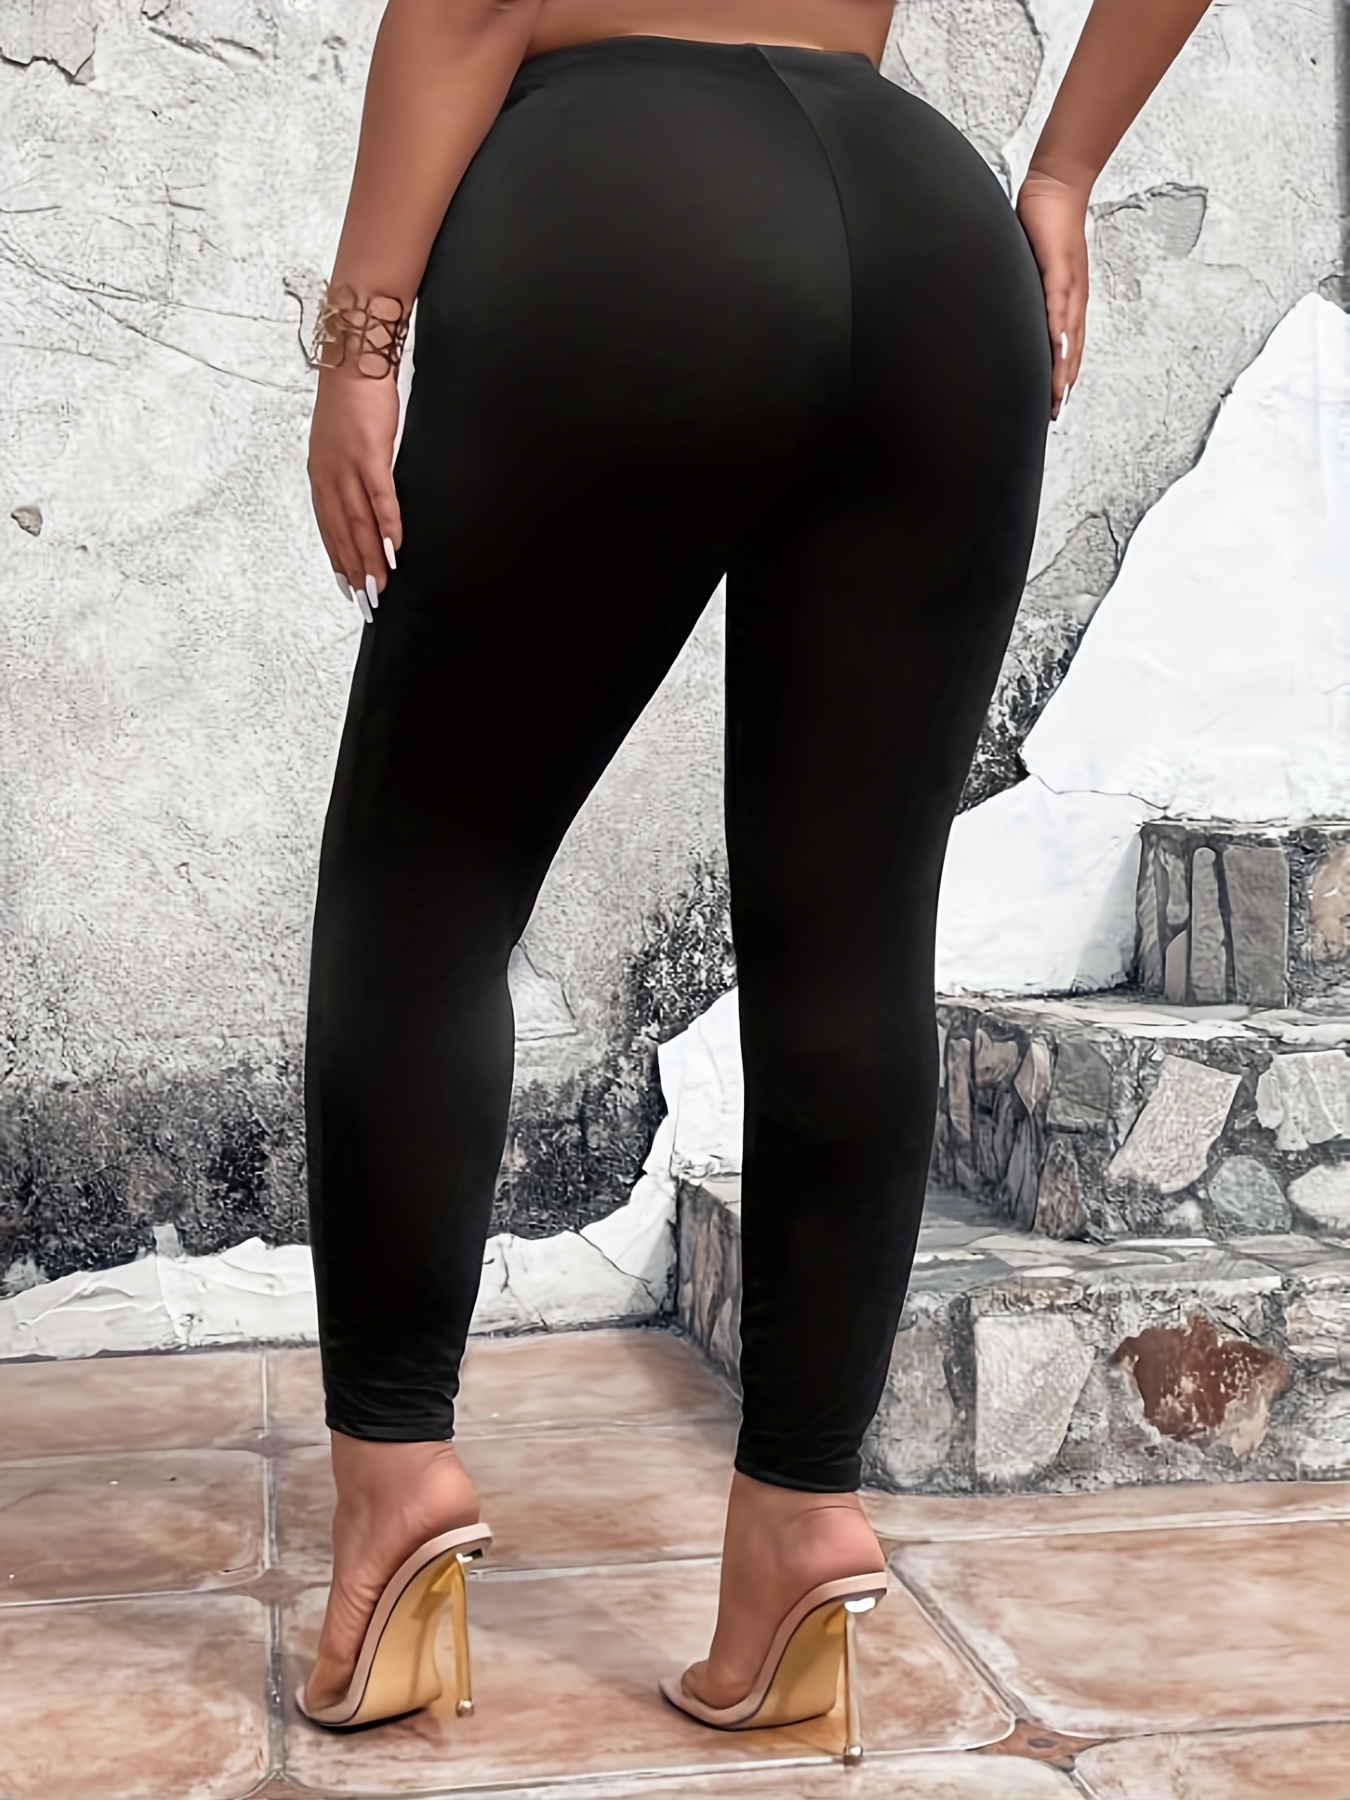 Plus Size Solid Fashion Hollow Pants Casual Women Leggings Waist Elastic  Pants J Leggings for Women Snag Tights Chub Rub Shorts 